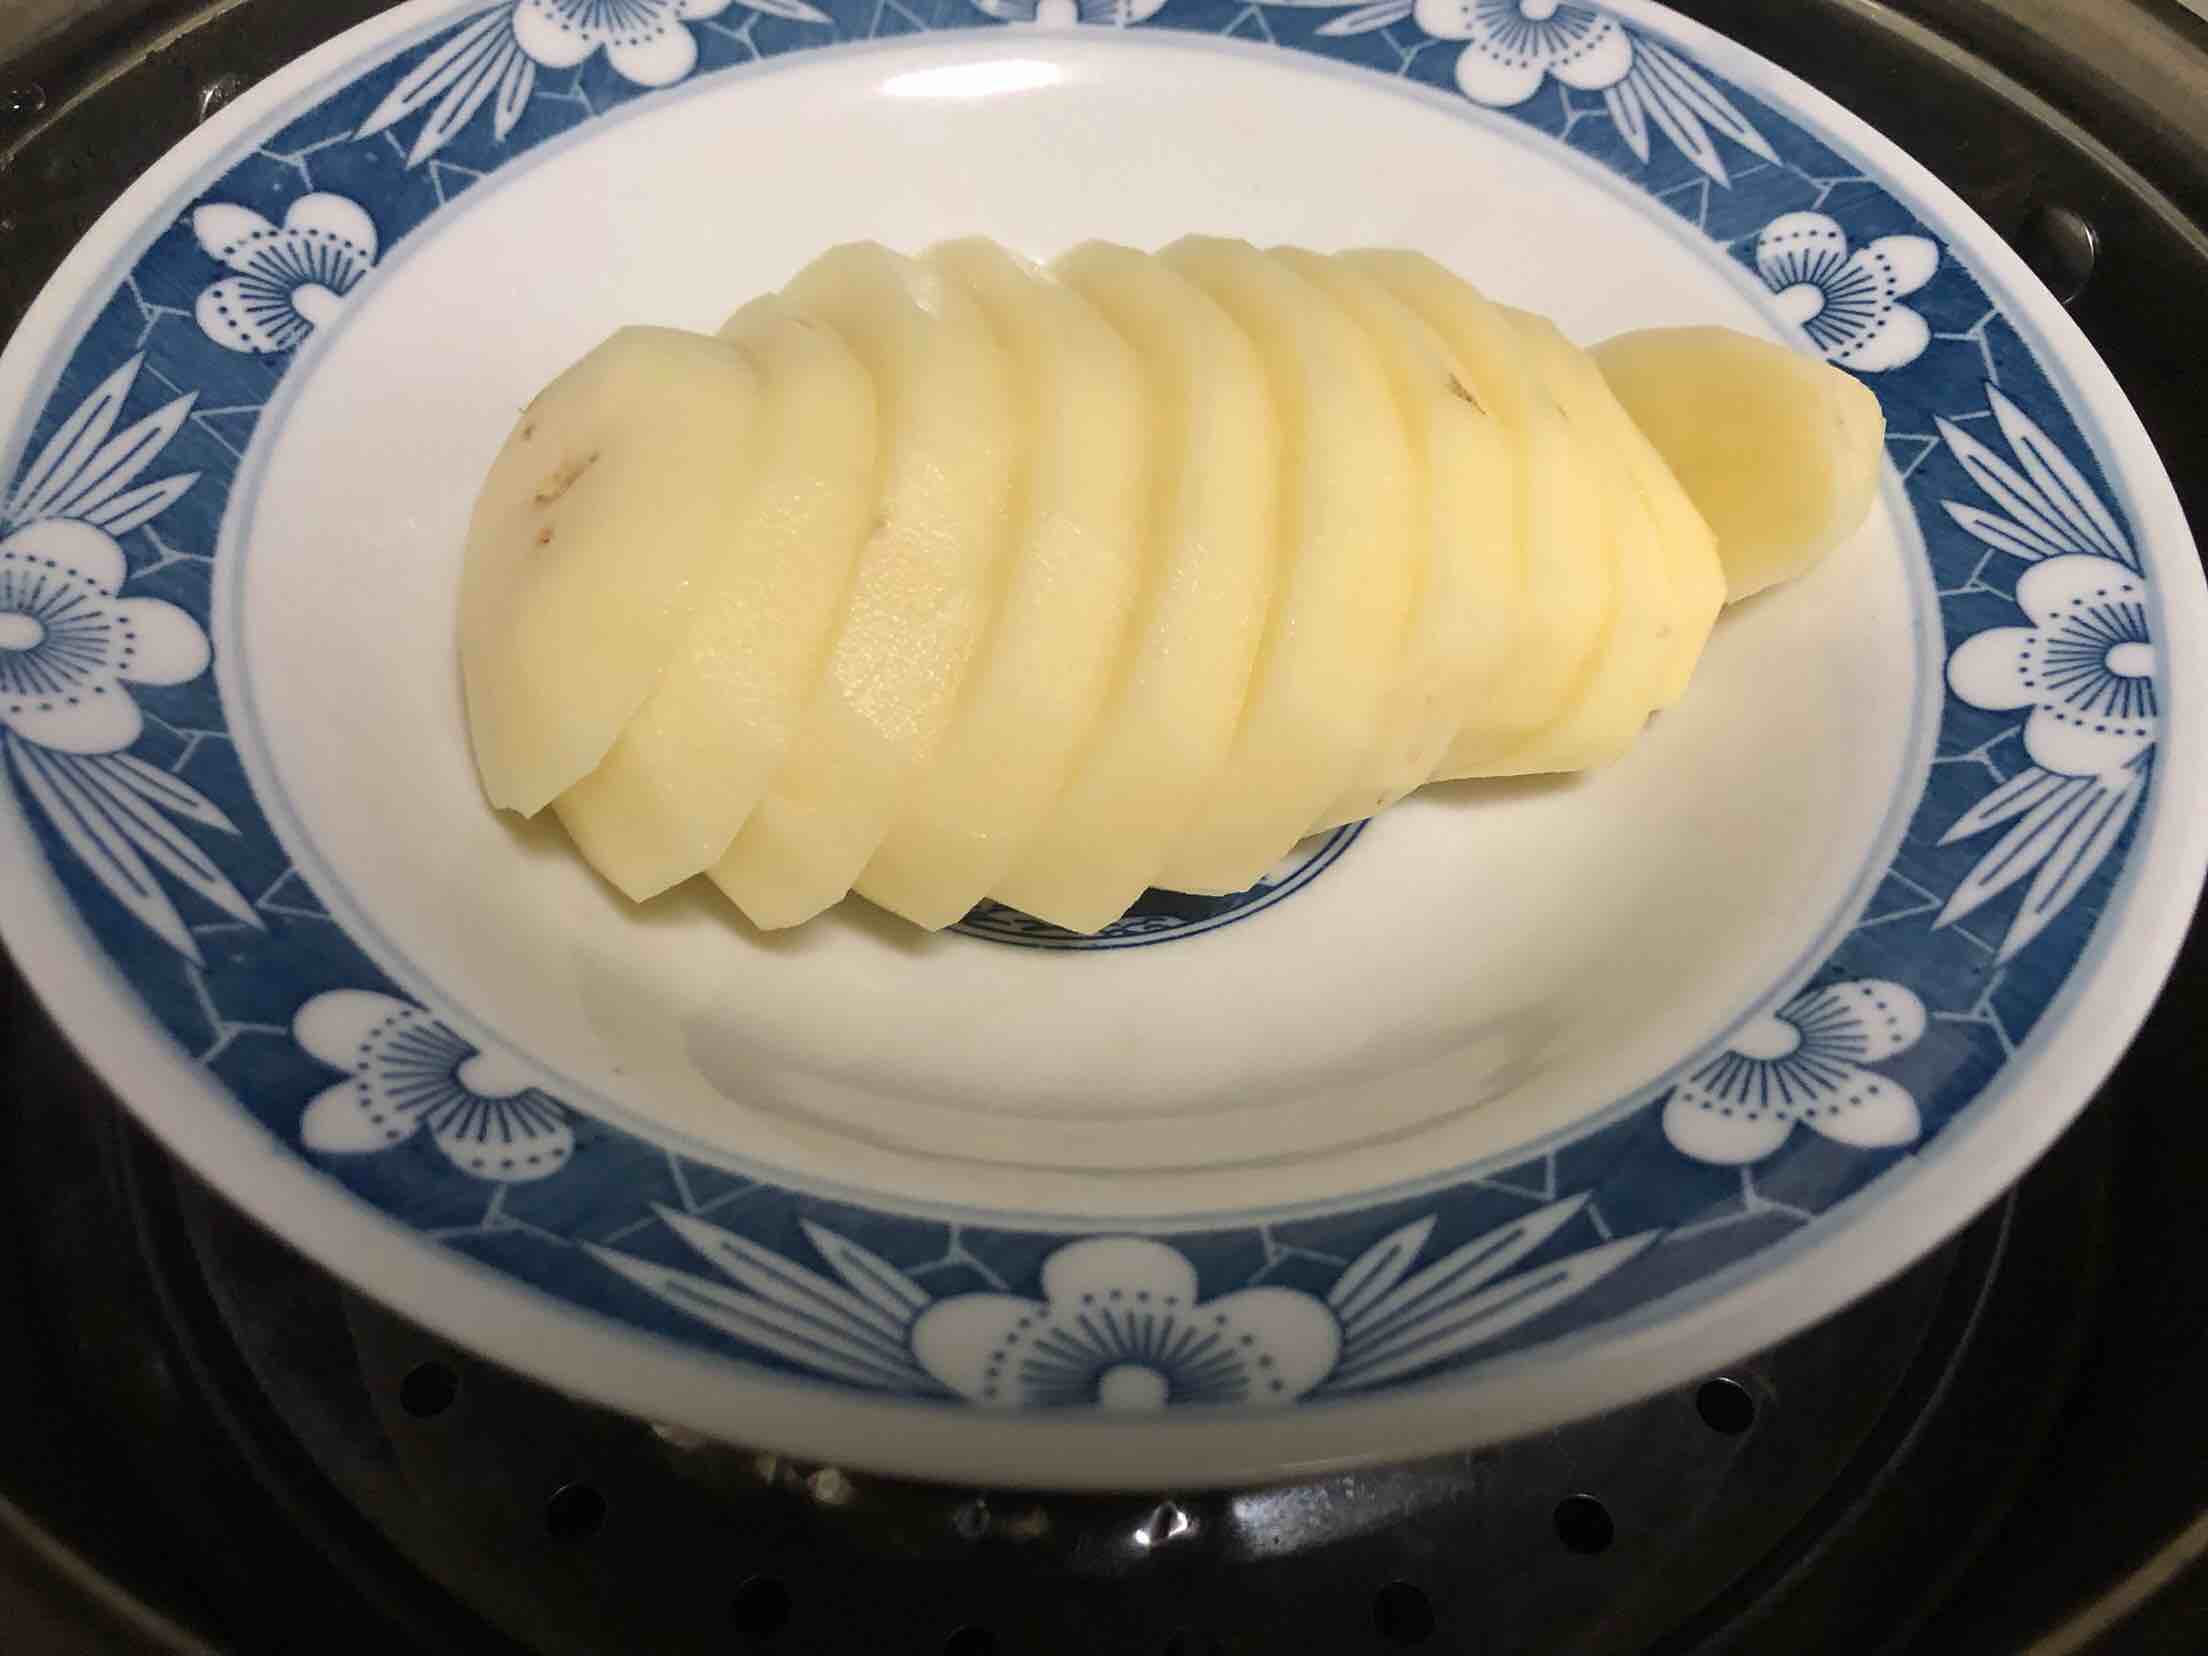 Potato Naked Oatmeal recipe